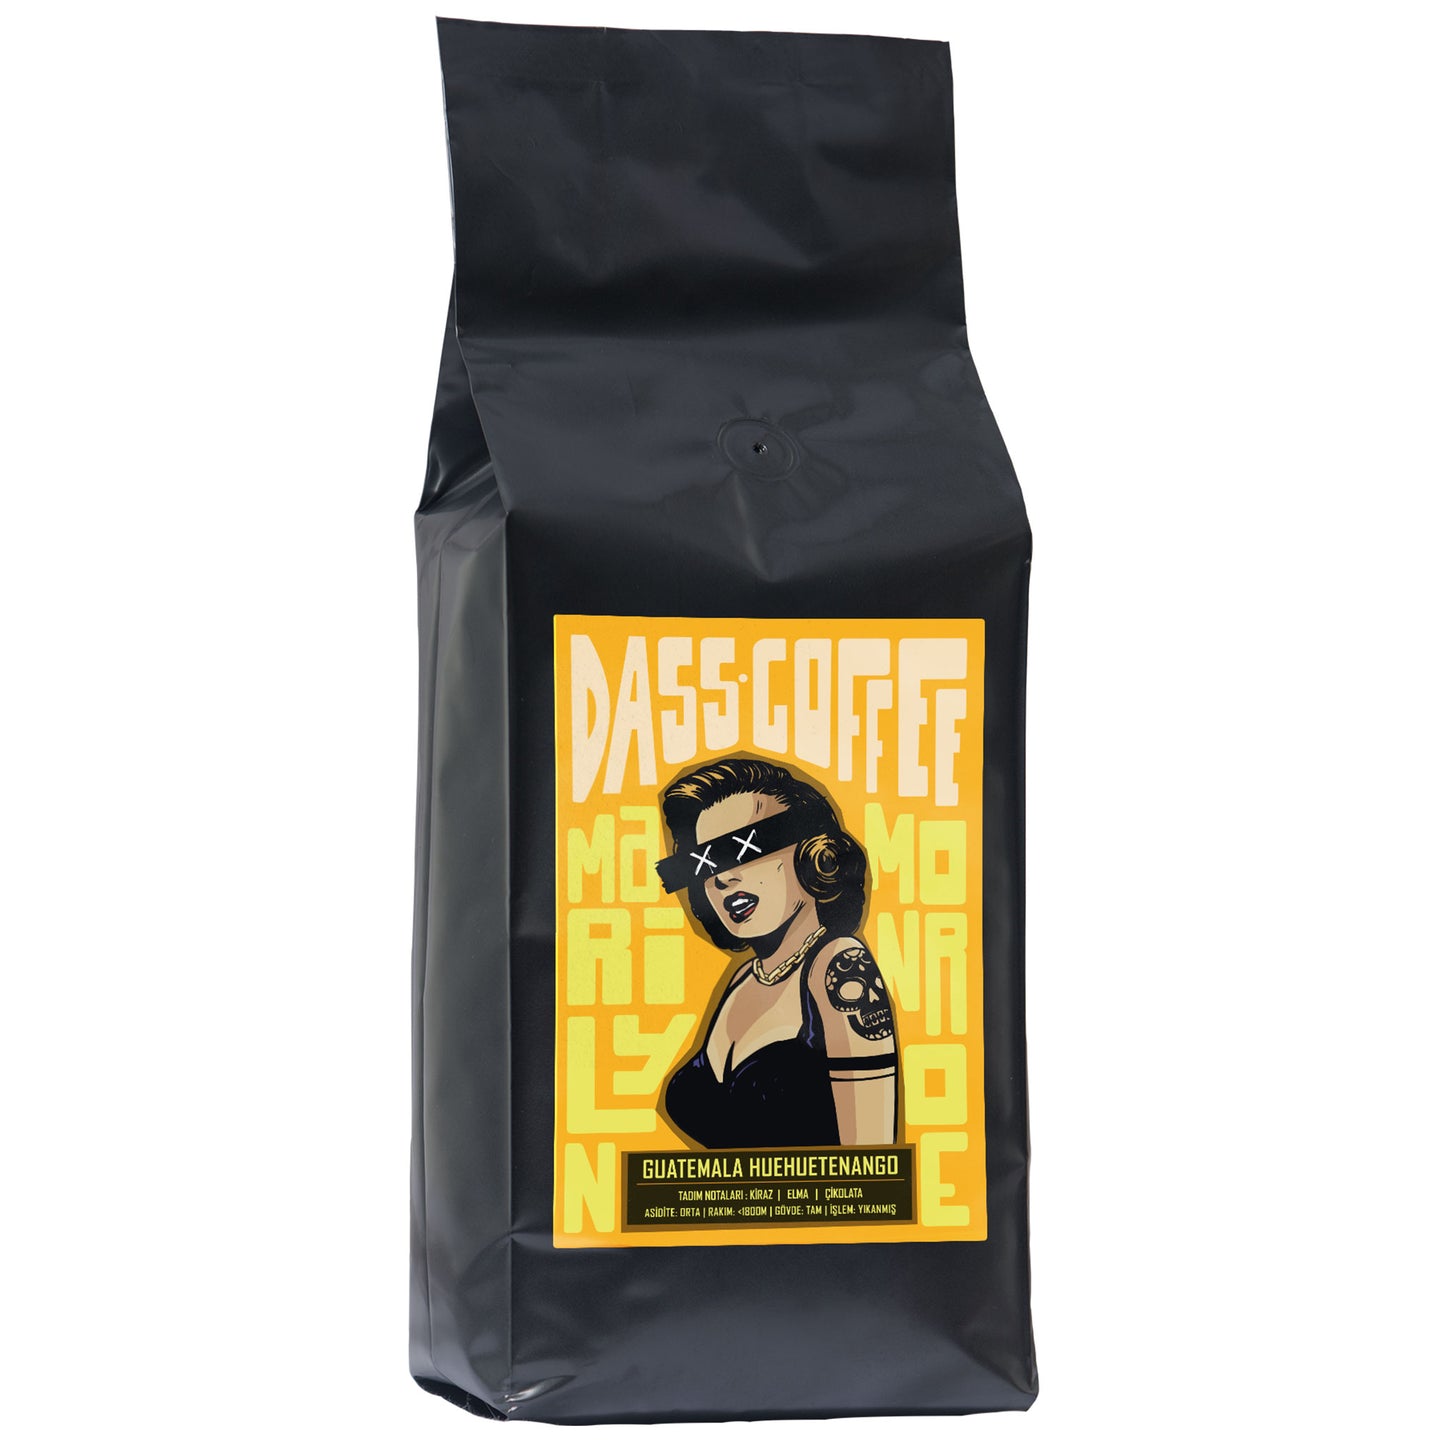 Dass Coffee Guatemala Huehuetenango Yöresel Filtre Kahve - 1kg